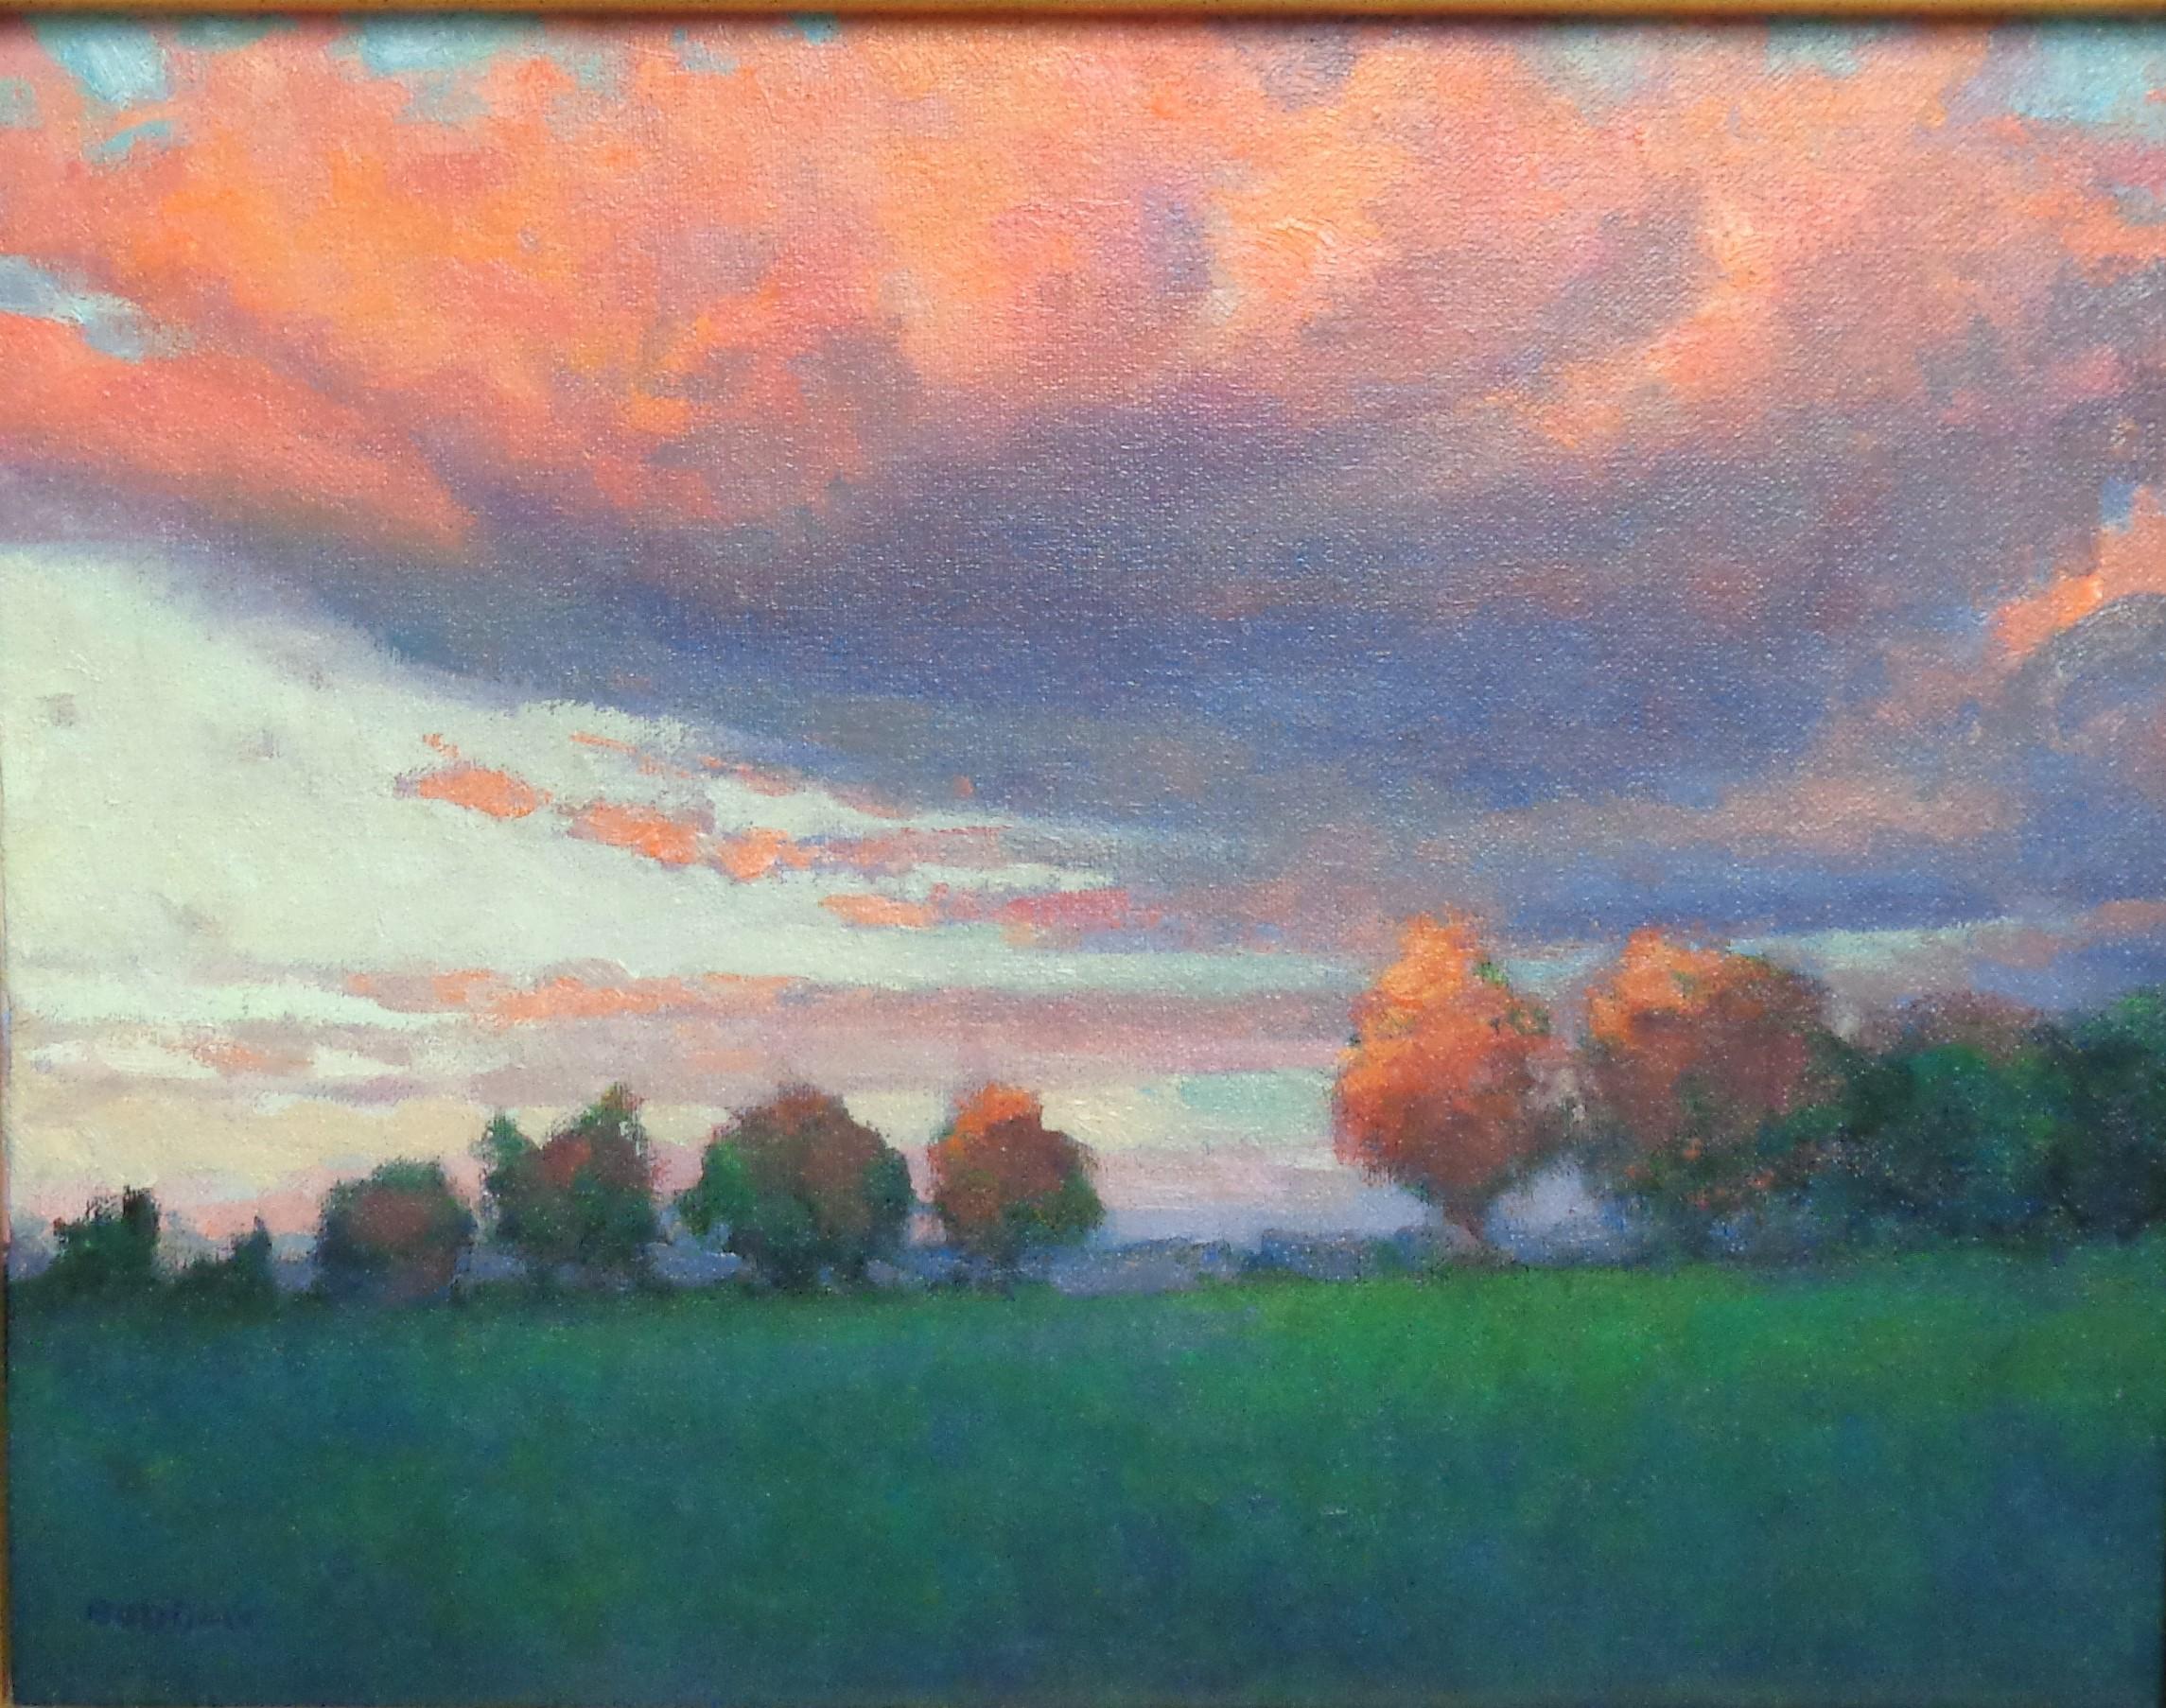  Impressionistic Rural Landscape Oil Painting Michael Budden Sunset Inspiration For Sale 1